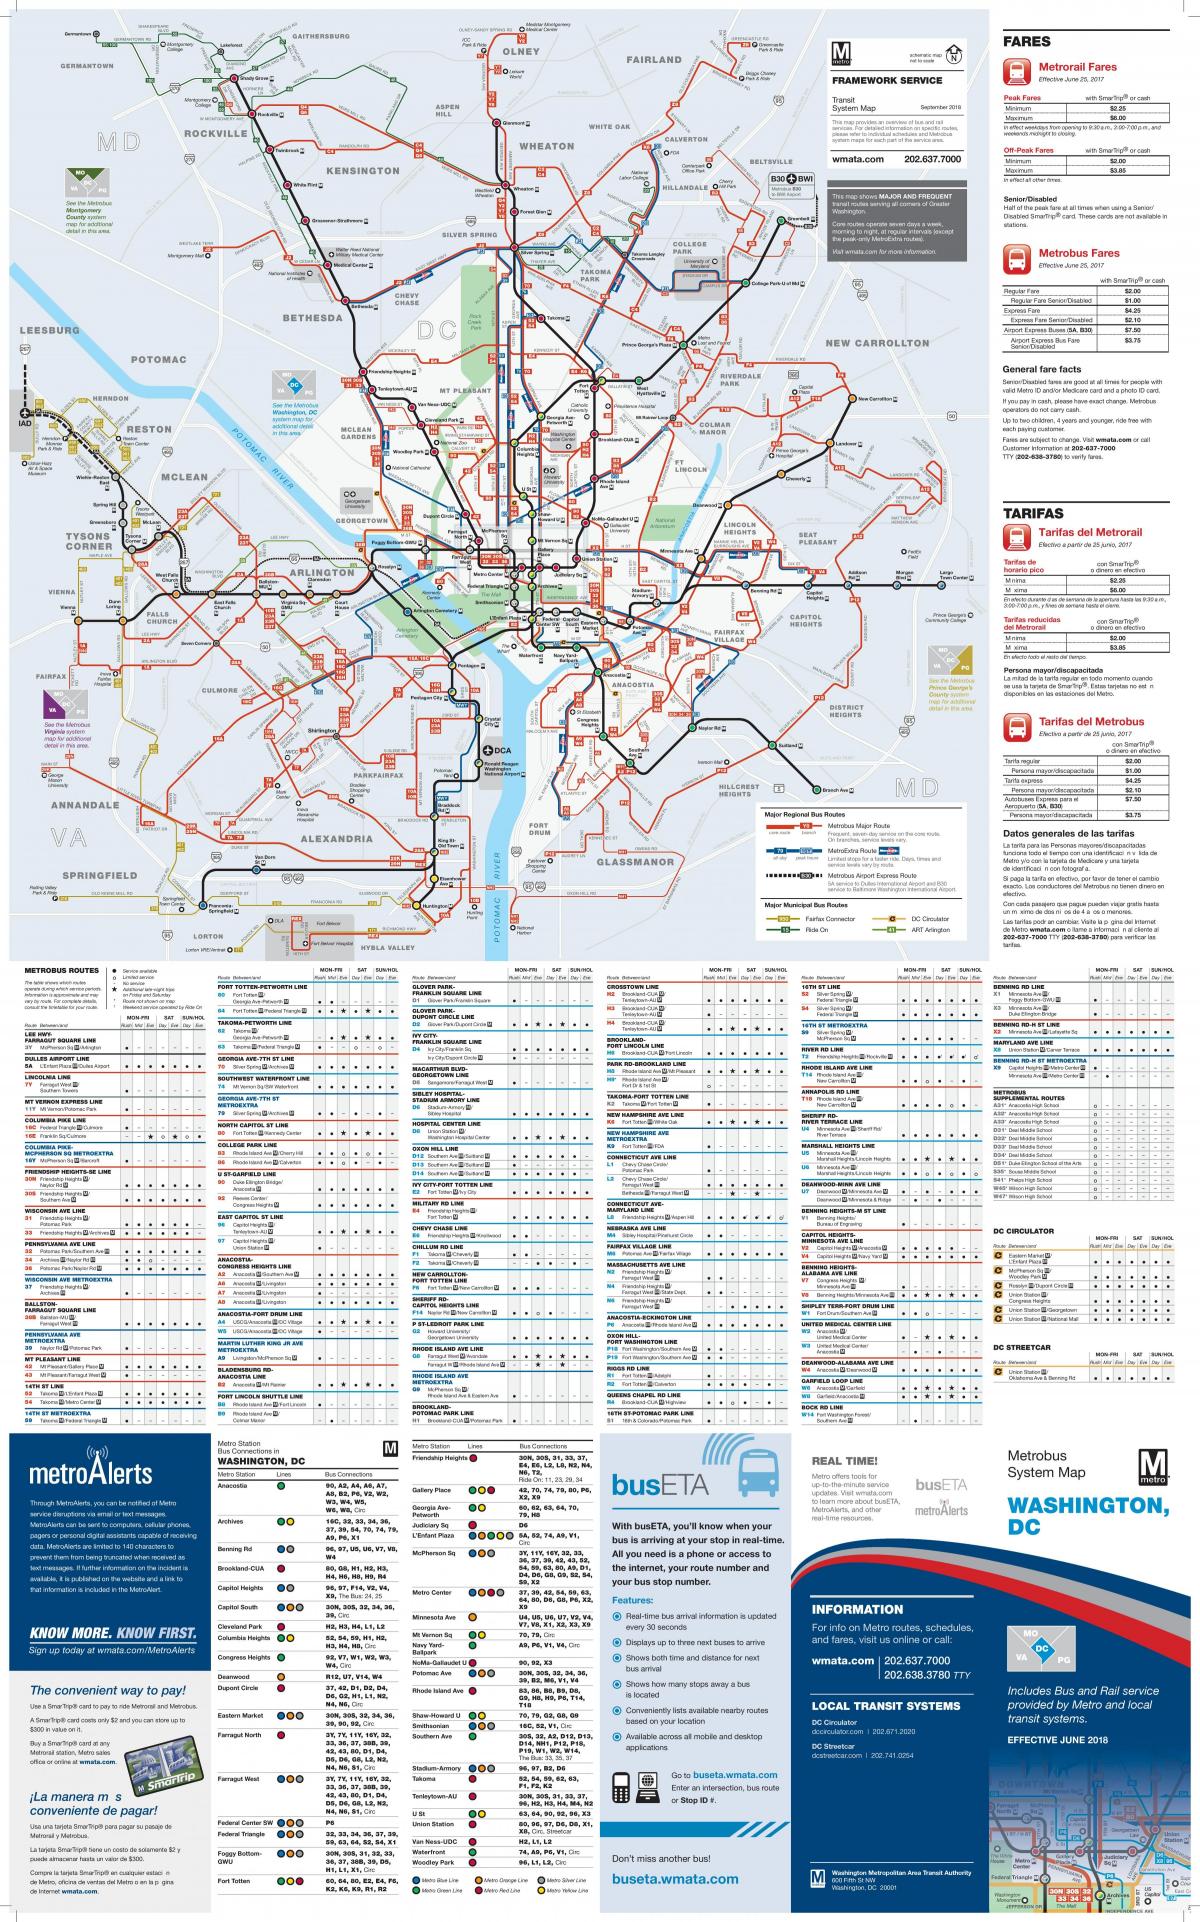 Washington DC bus station map